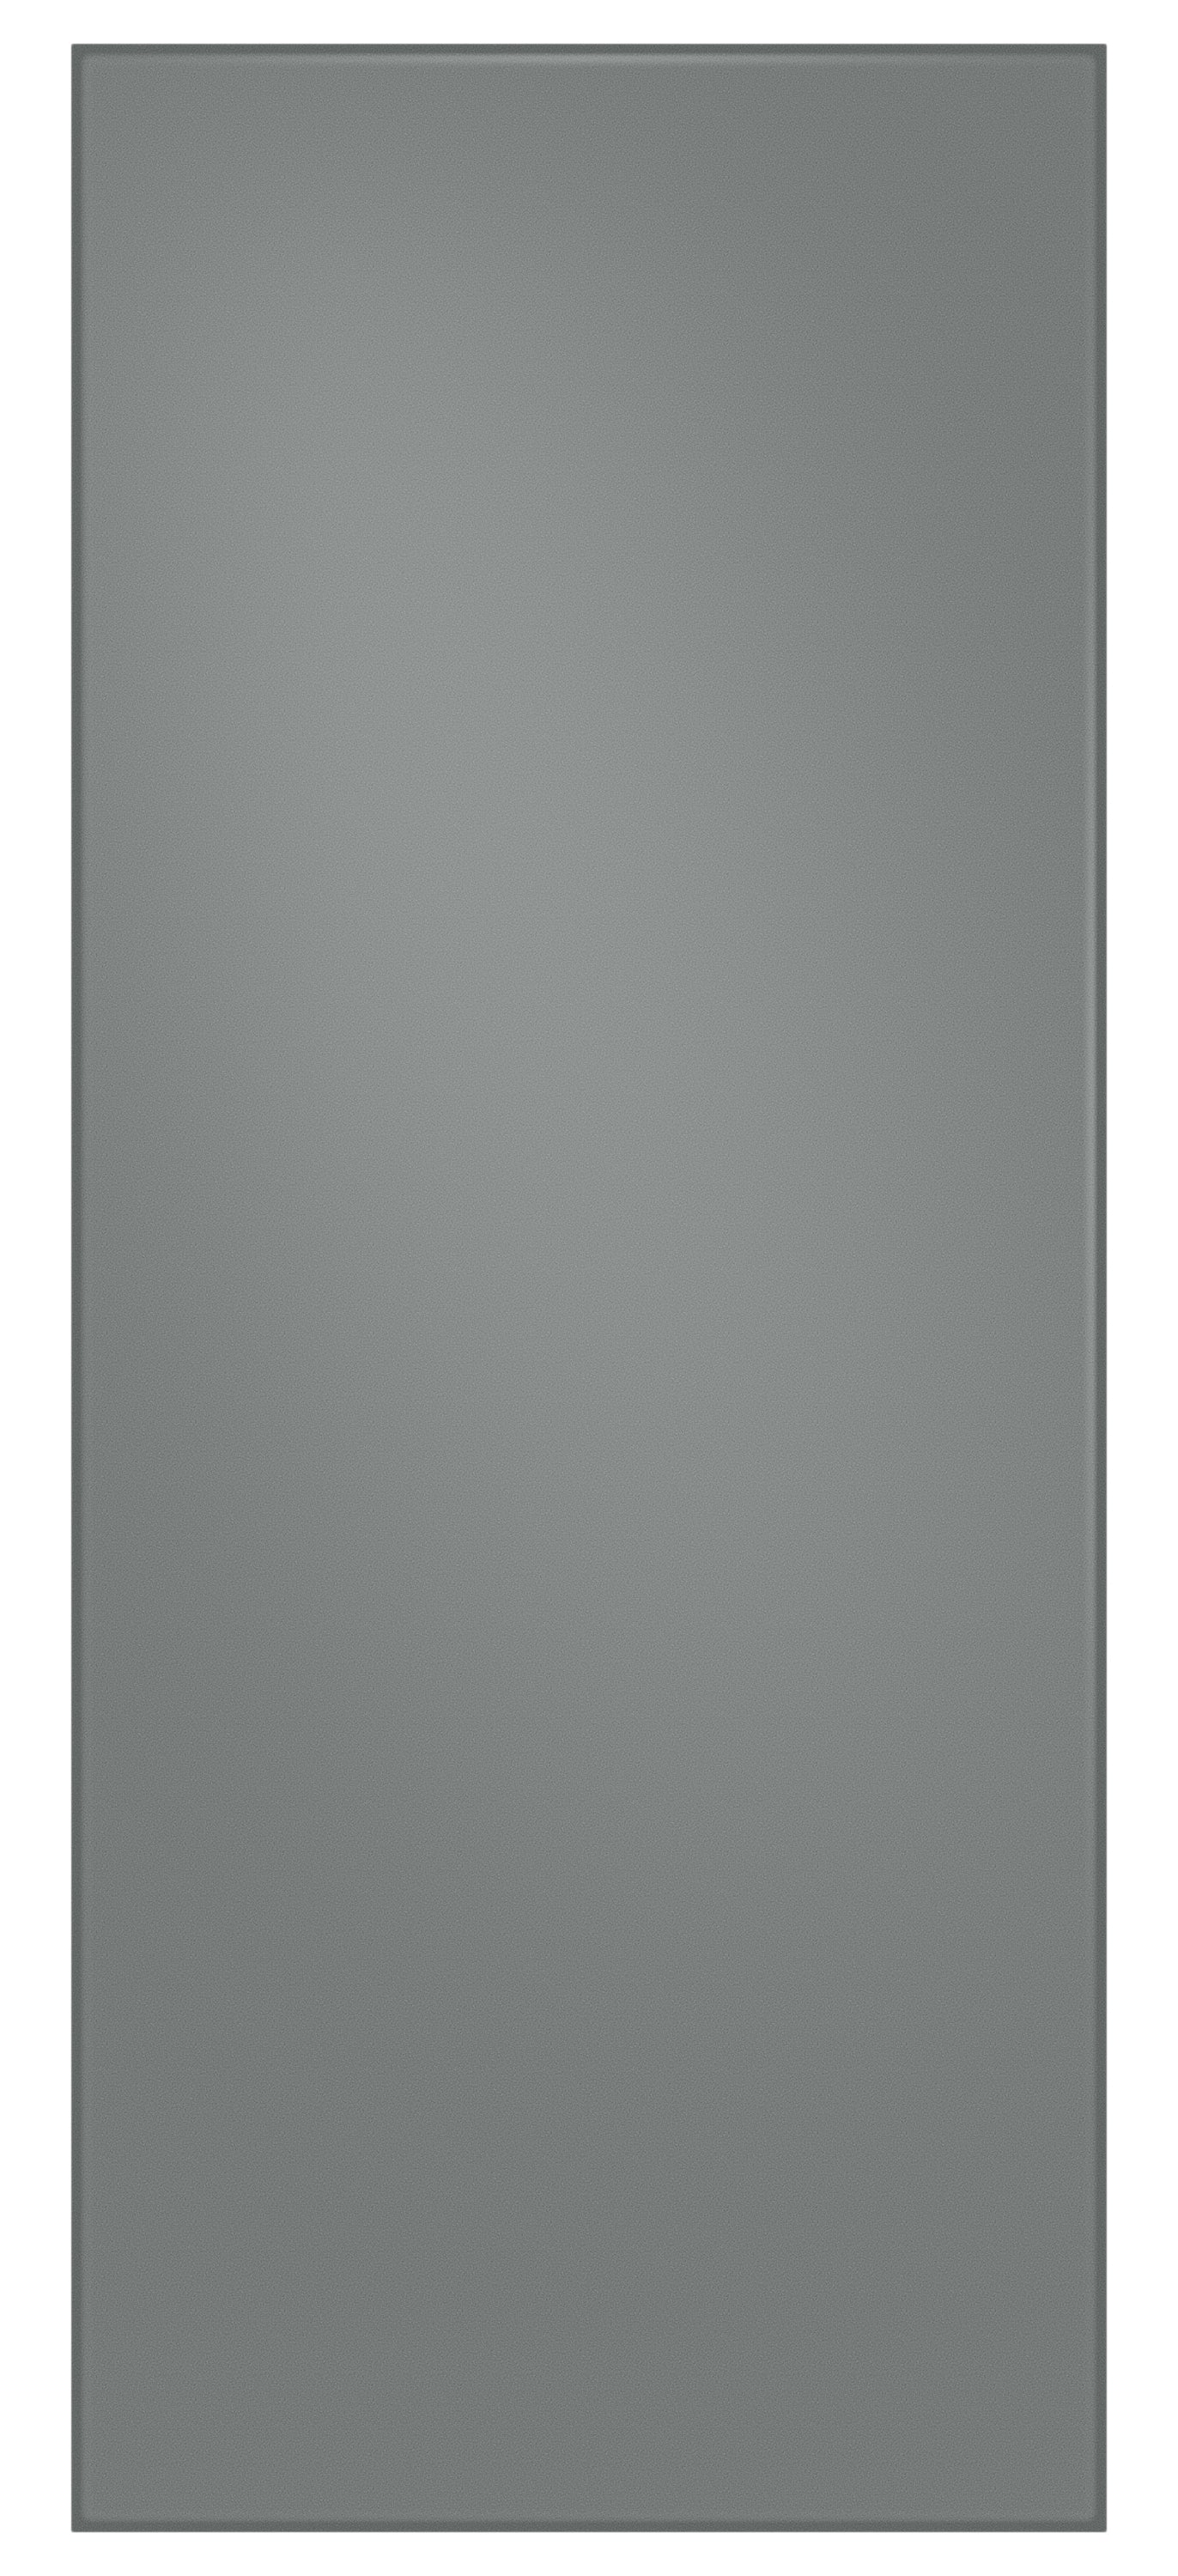 Samsung BESPOKE Grey Matte Glass Custom Top Panel for 36" French-Door Refrigerator - RA-F18DU331/AA